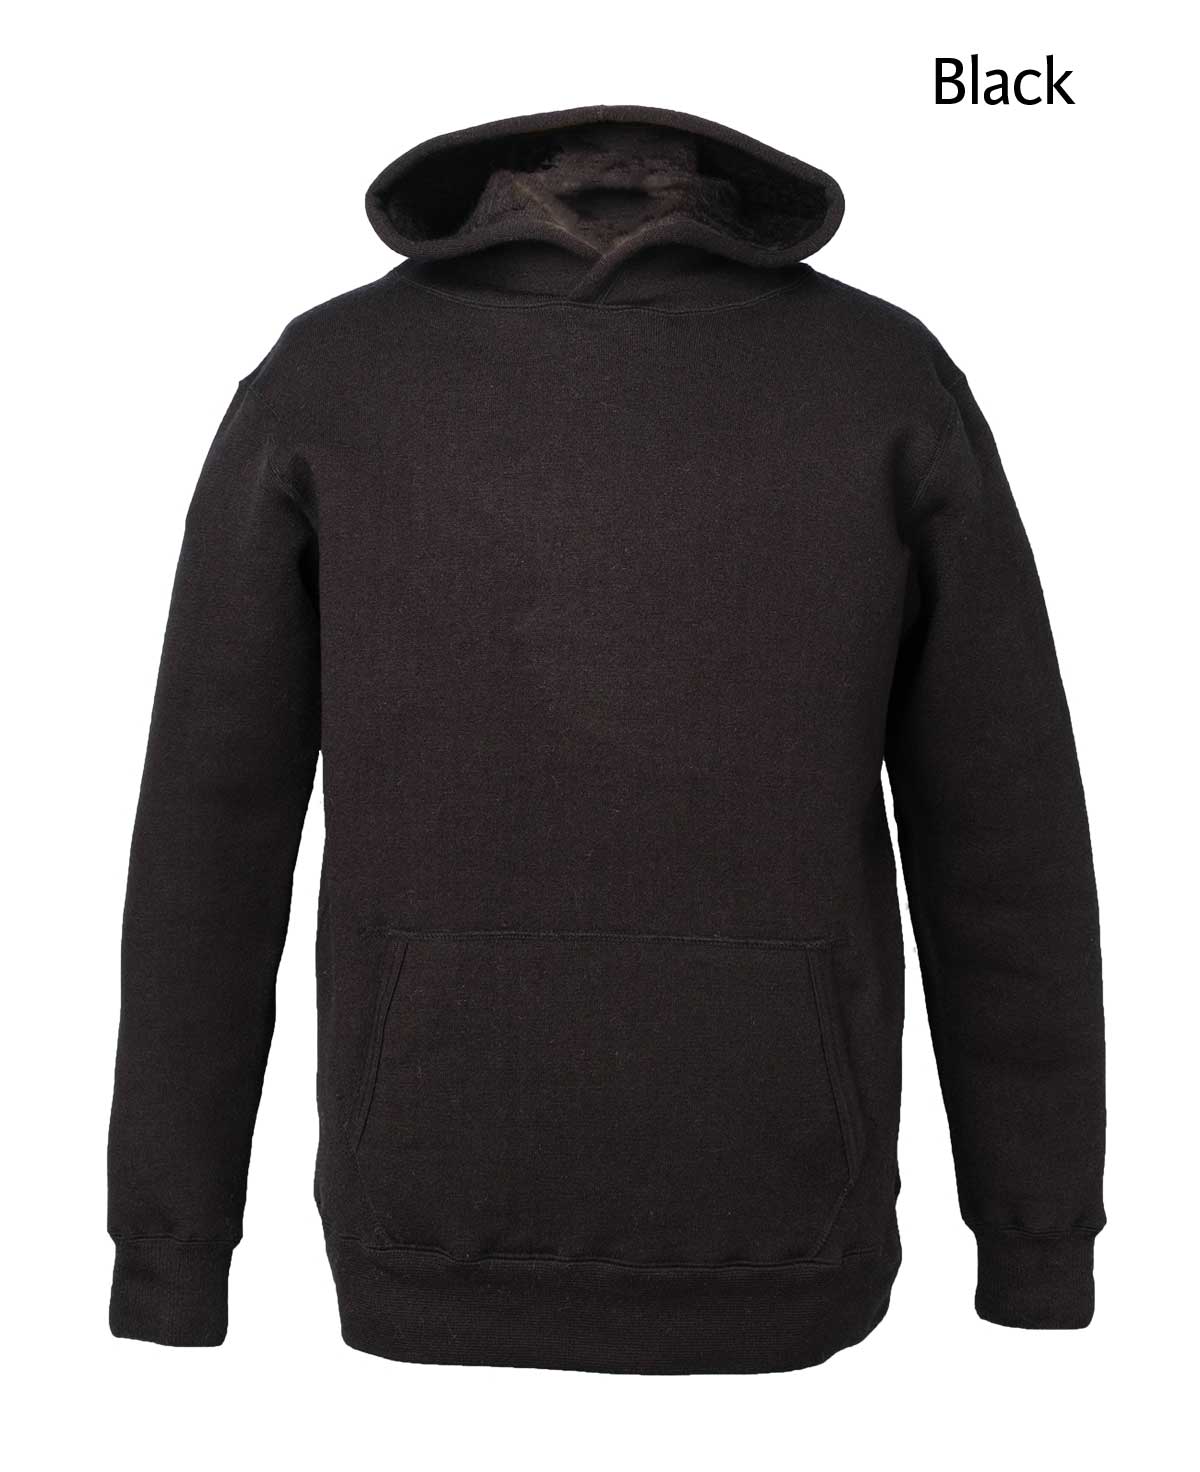 YETINA Pullover Hoodie BLACK BLICK限定カラー2021年カラー